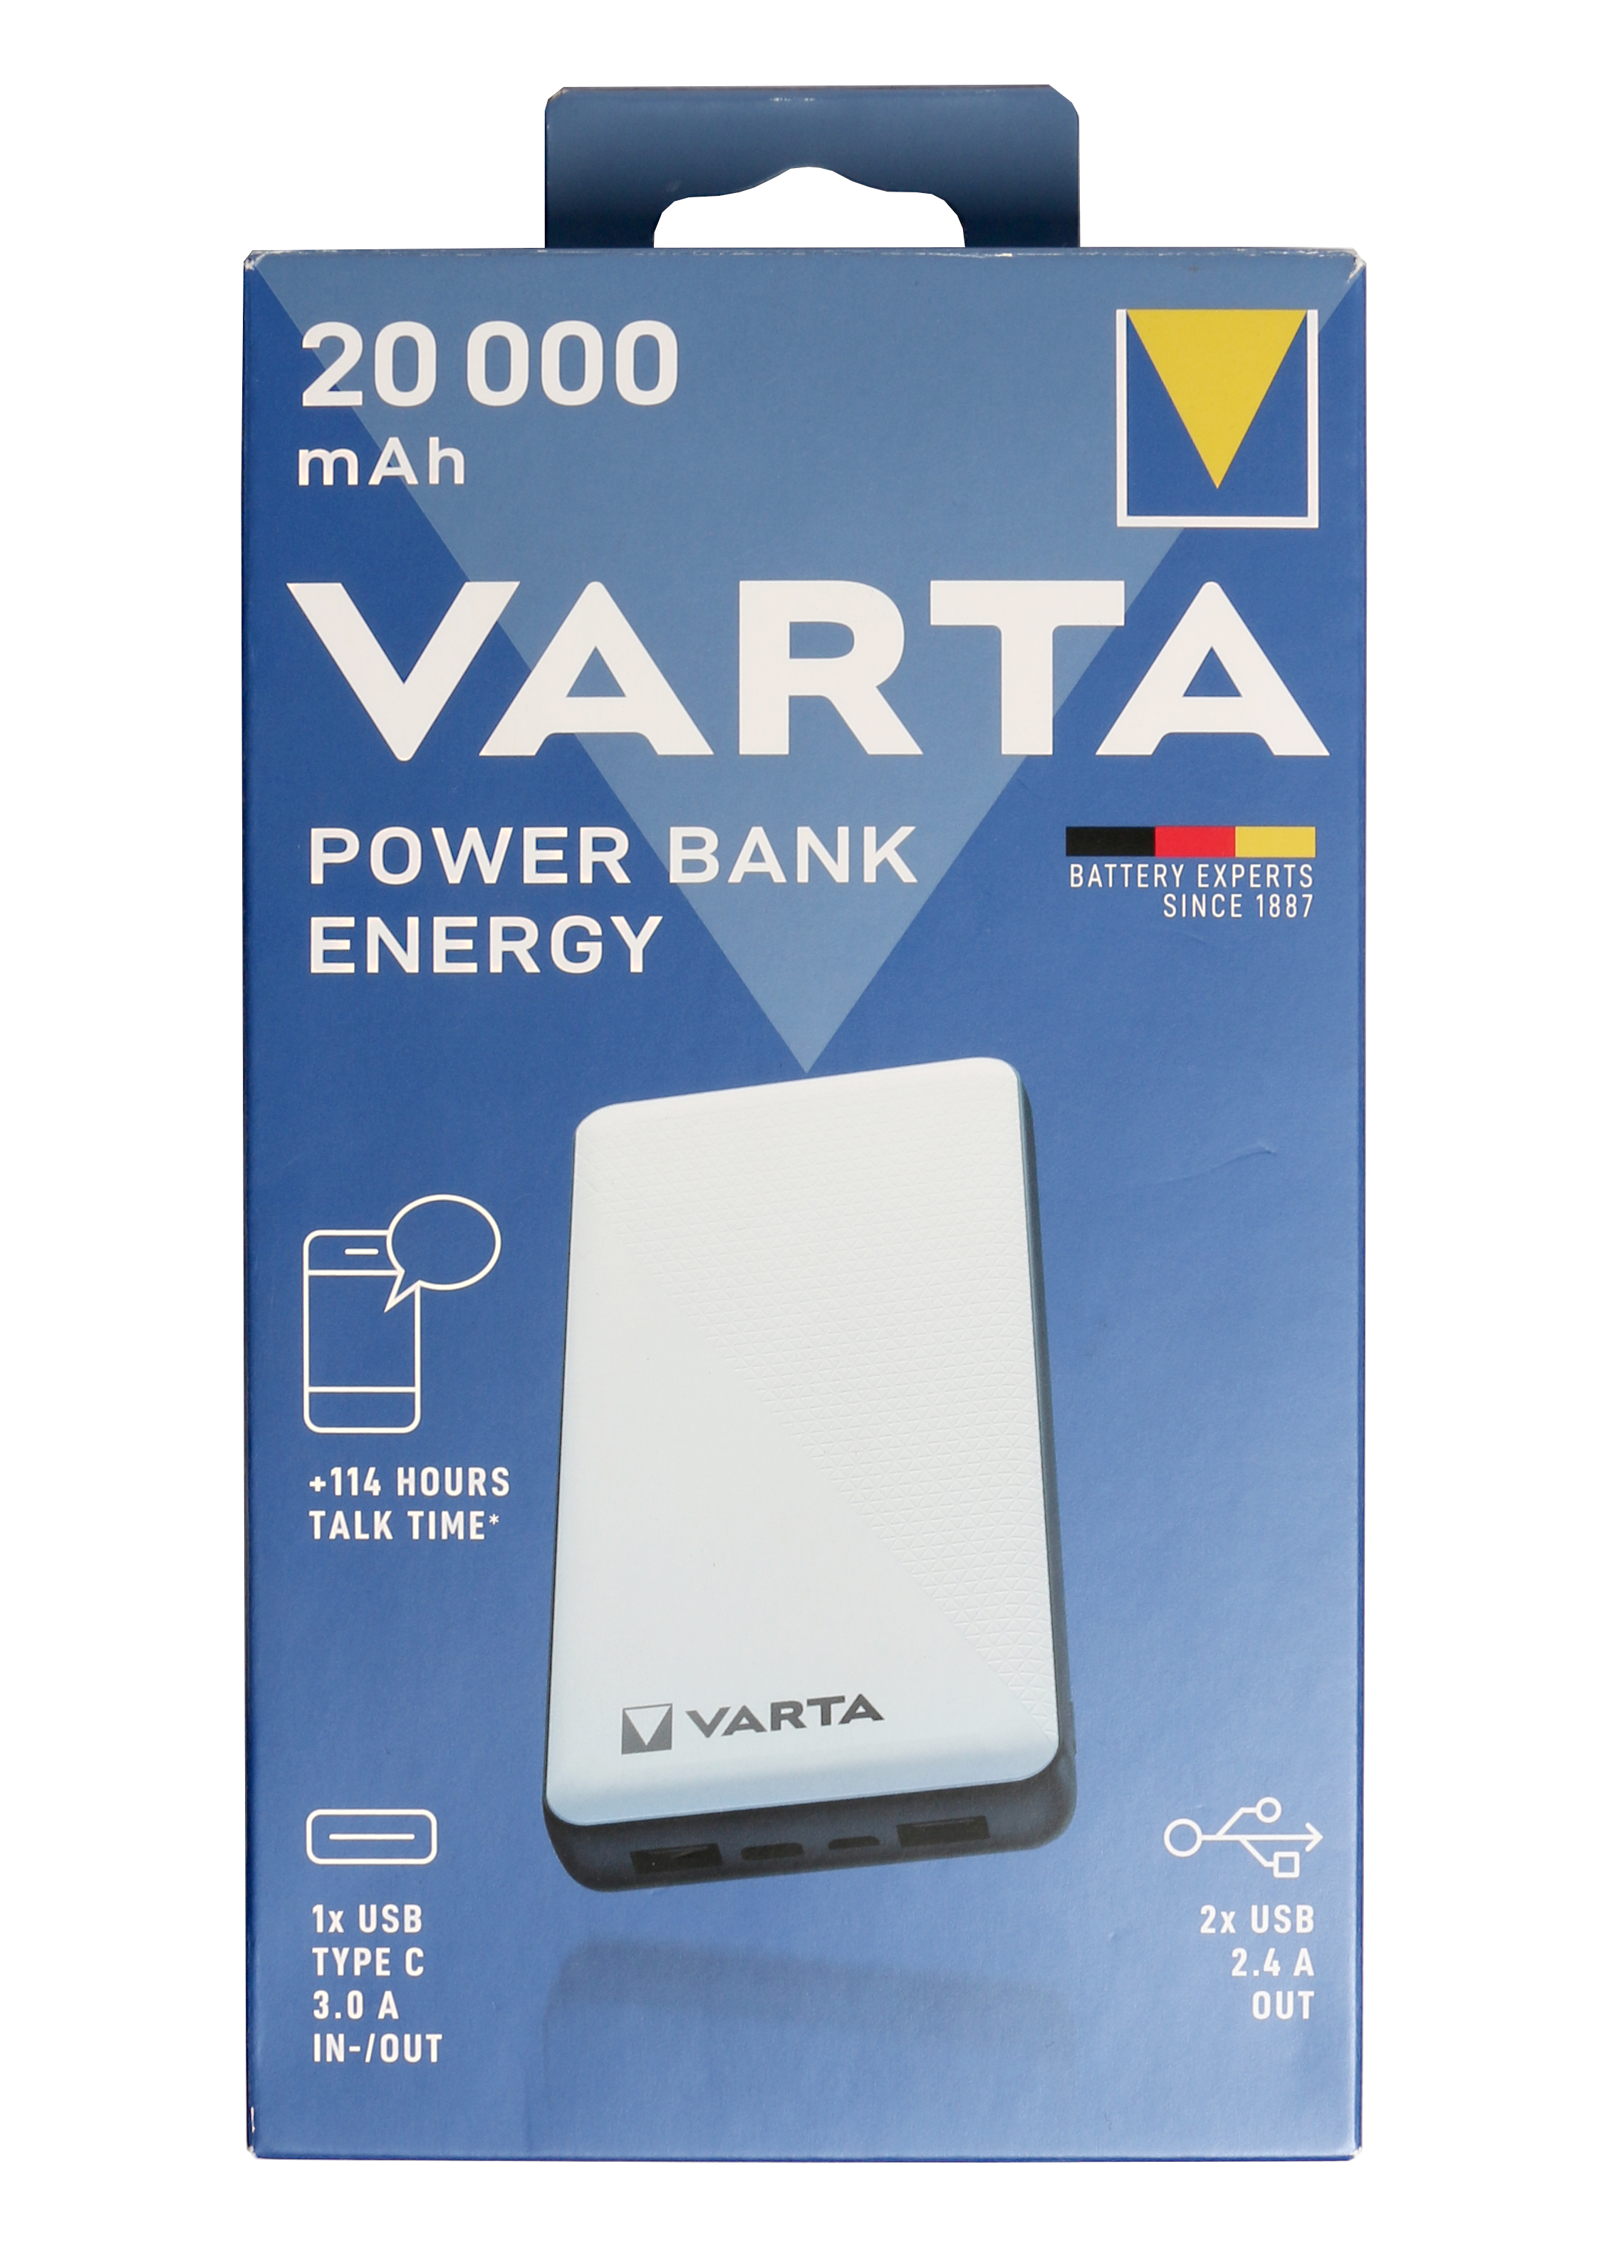 Varta Powerbank Energy 20000